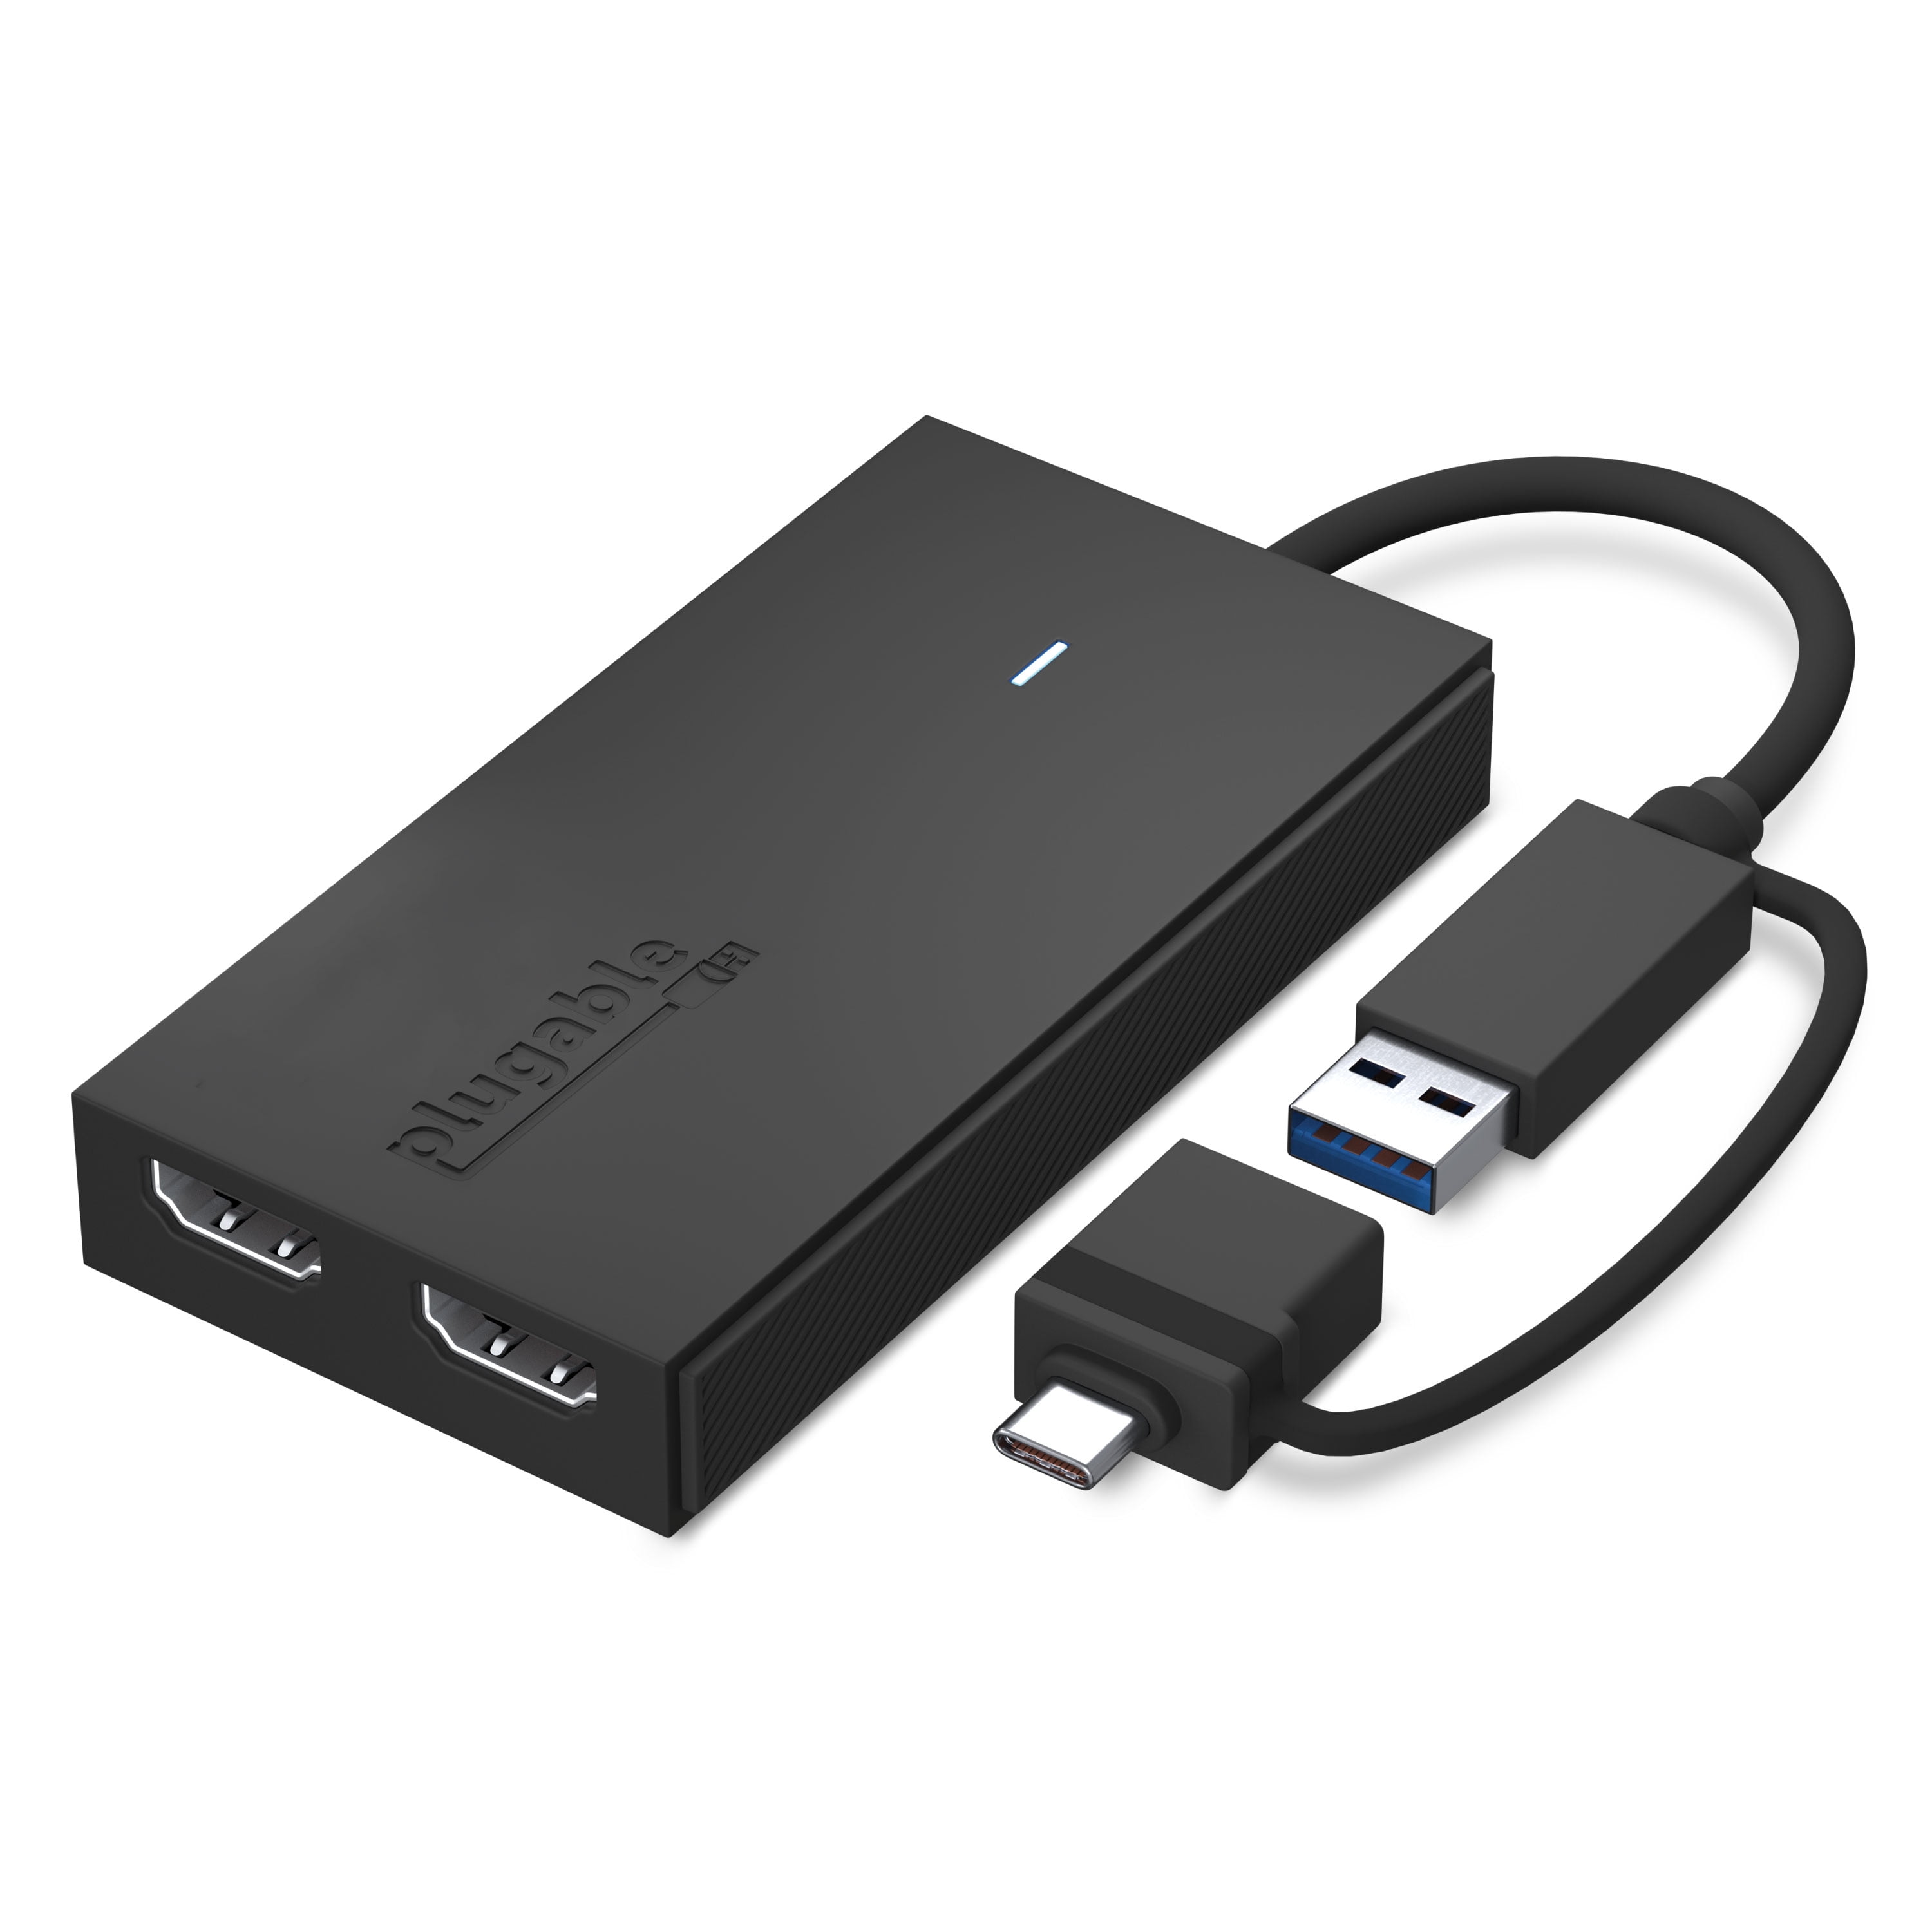 Plugable USB 3.0 or USB C HDMI Adapter for Dual Monitors, Universal Video Graphics Adapter for Mac and Windows, Thunderbolt 3 / 4, USB 3.0 USB-C, 1080p@60Hz - Walmart.com